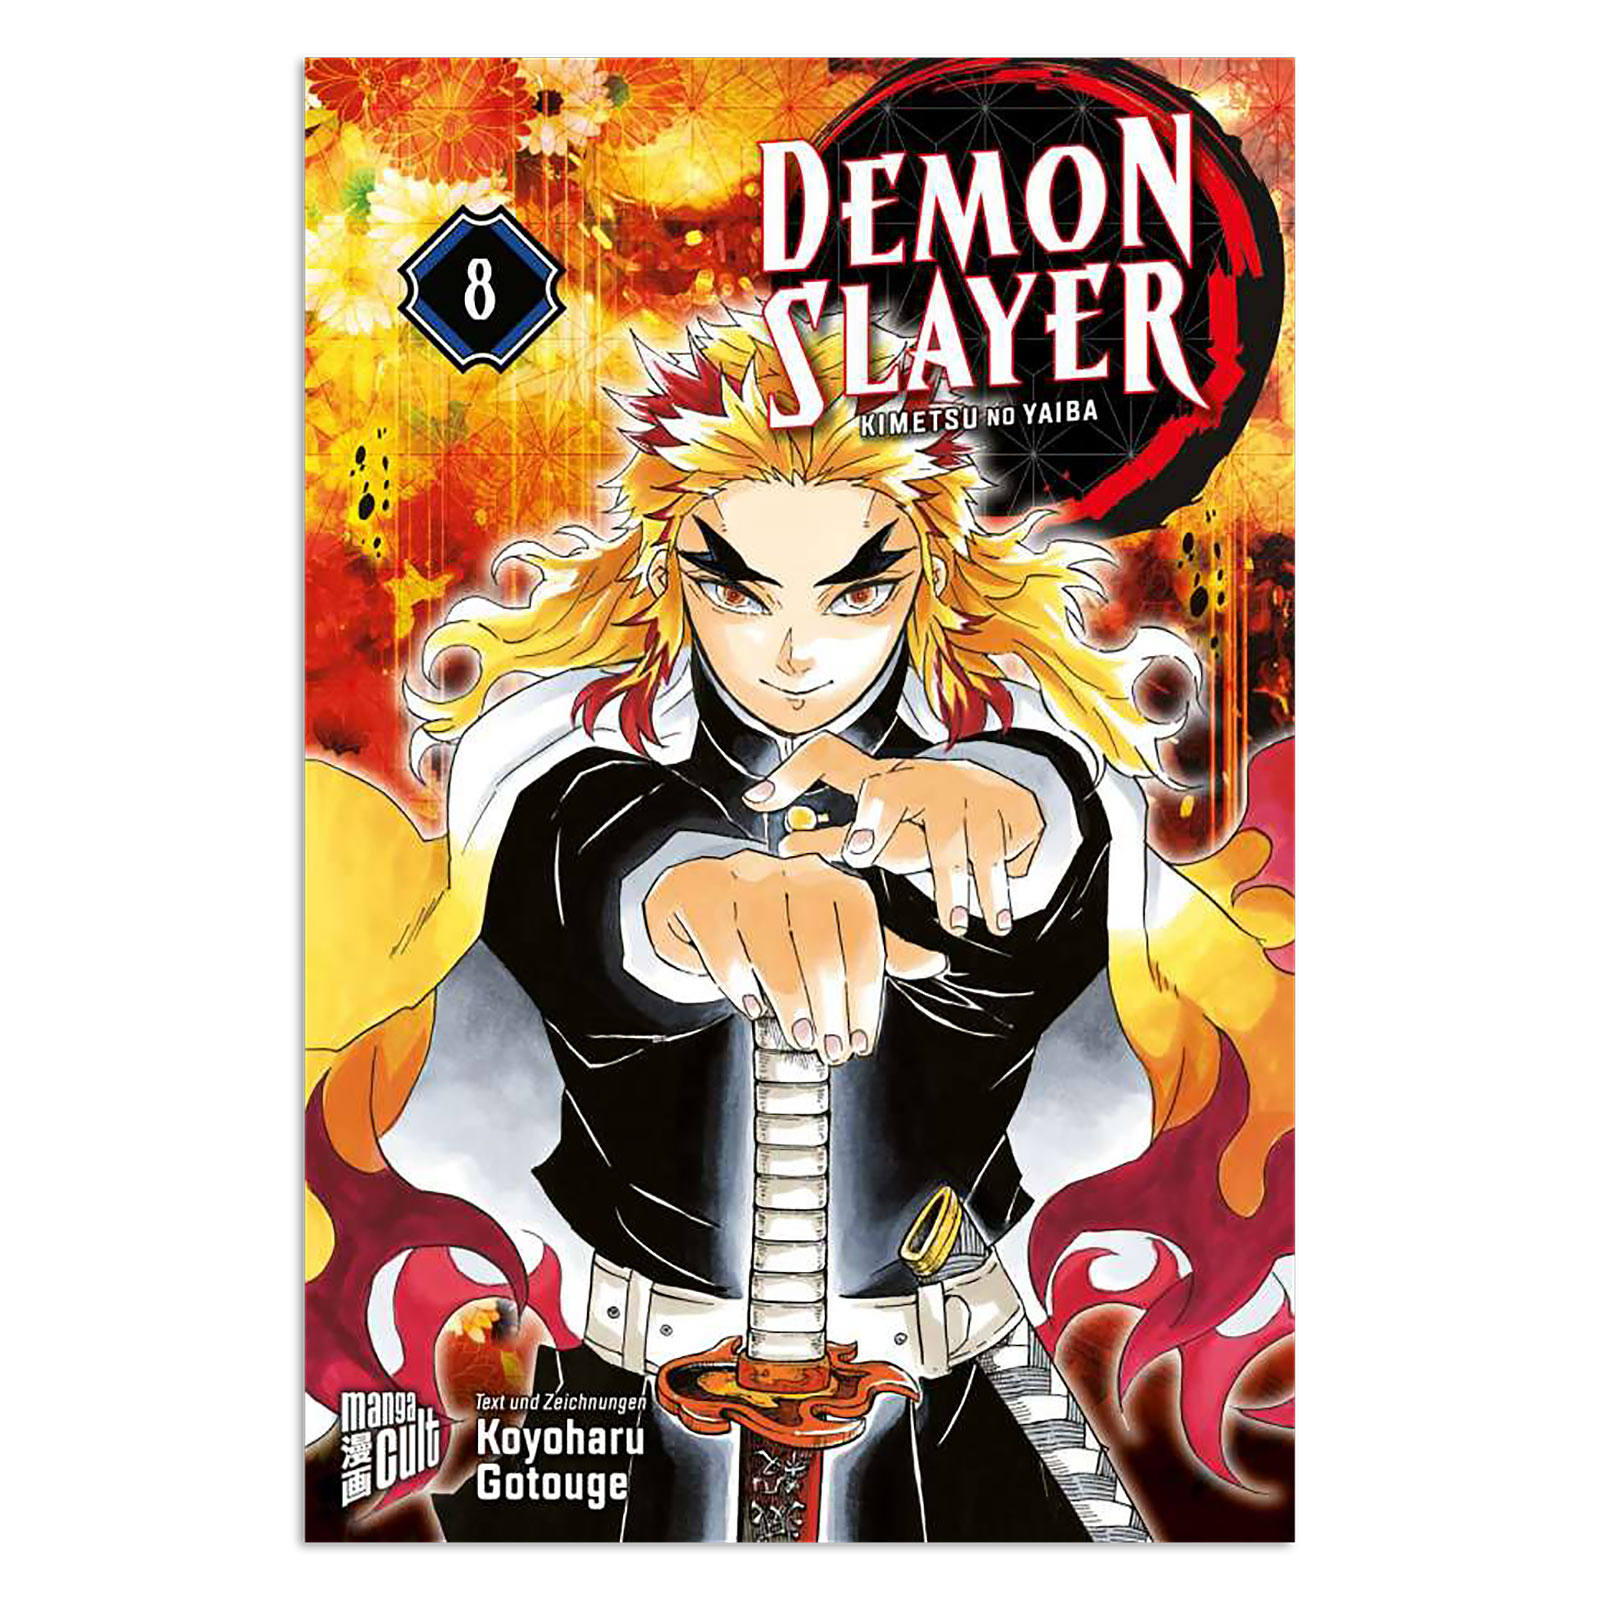 Demon Slayer - Kimetsu no yaiba Volume 8 Paperback